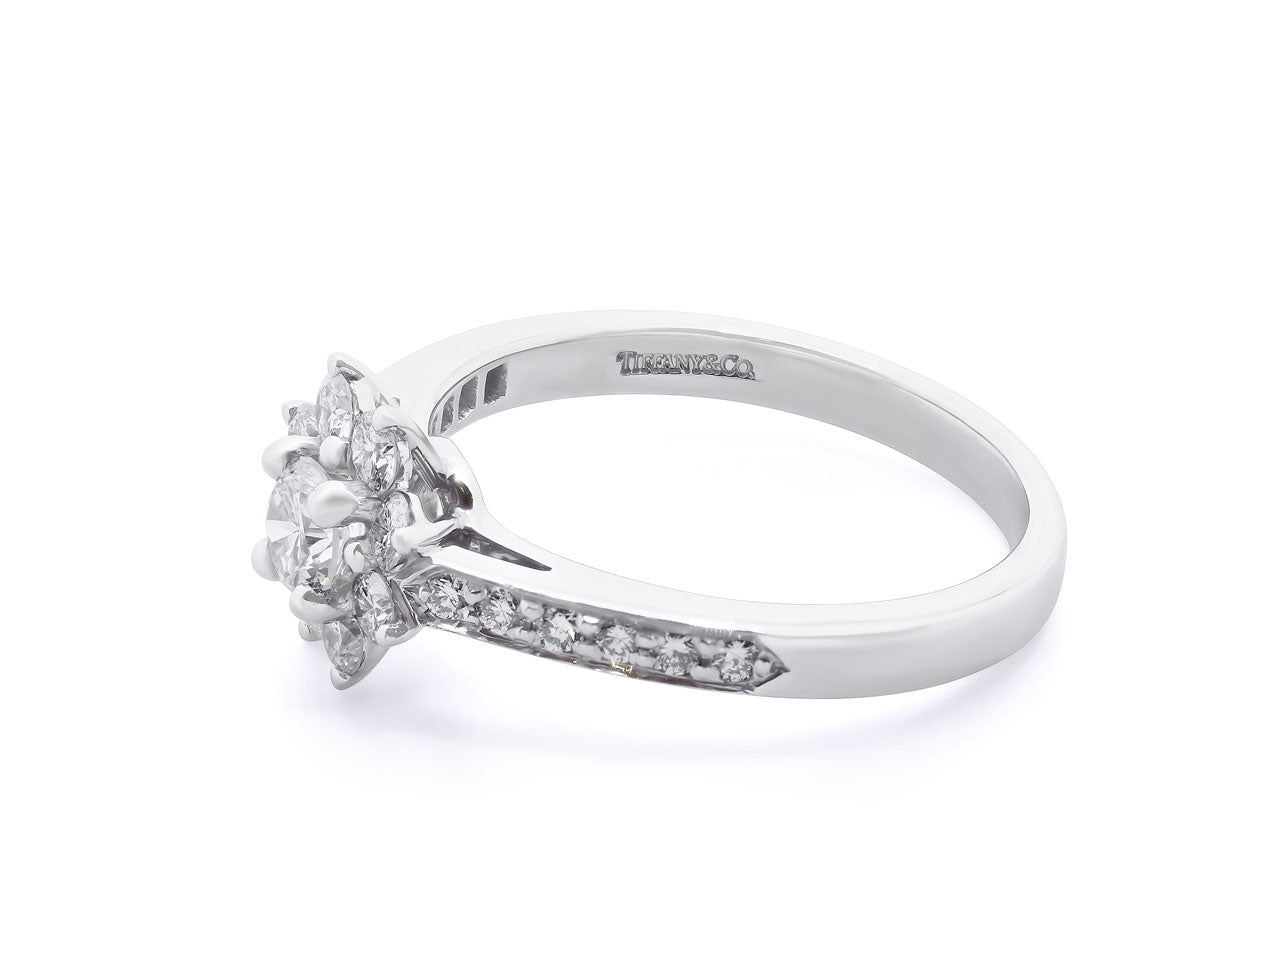 Tiffany & Co. Diamond Flower Ring in Platinum